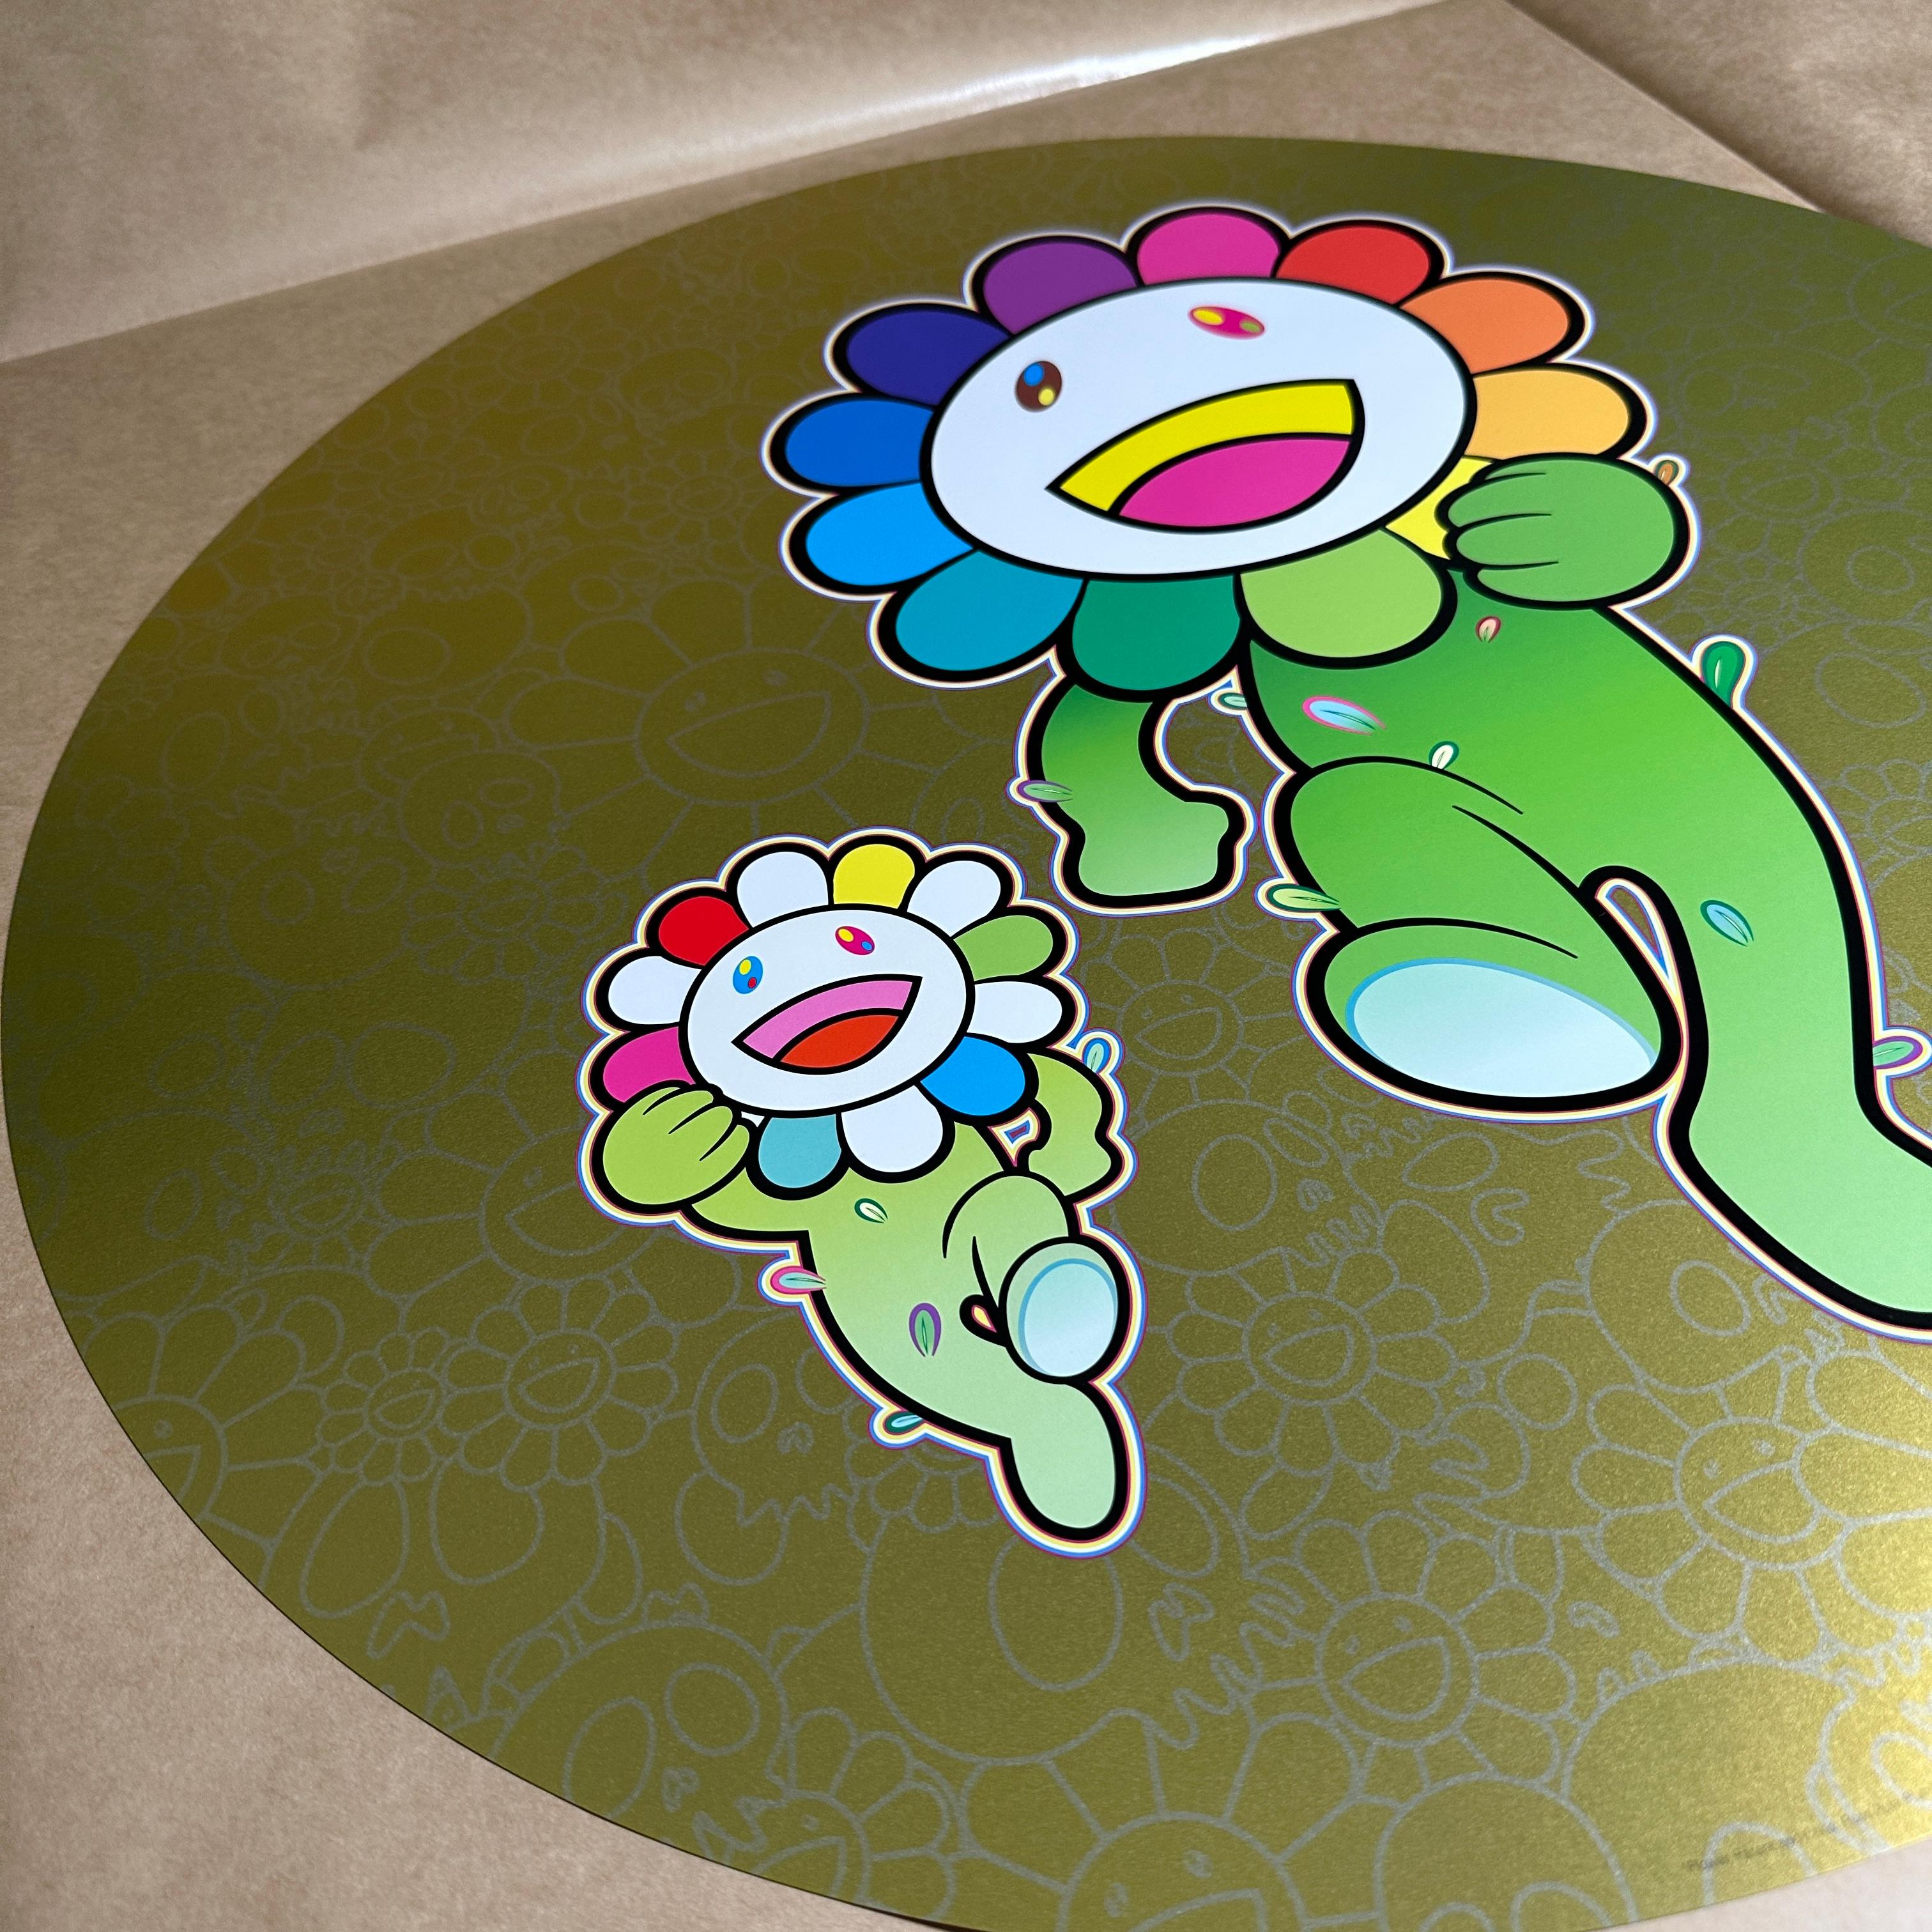 Flower Parent and Child, Rum Pum Pum! (Takashi Murakami, Gold, flowers, Japan) For Sale 7